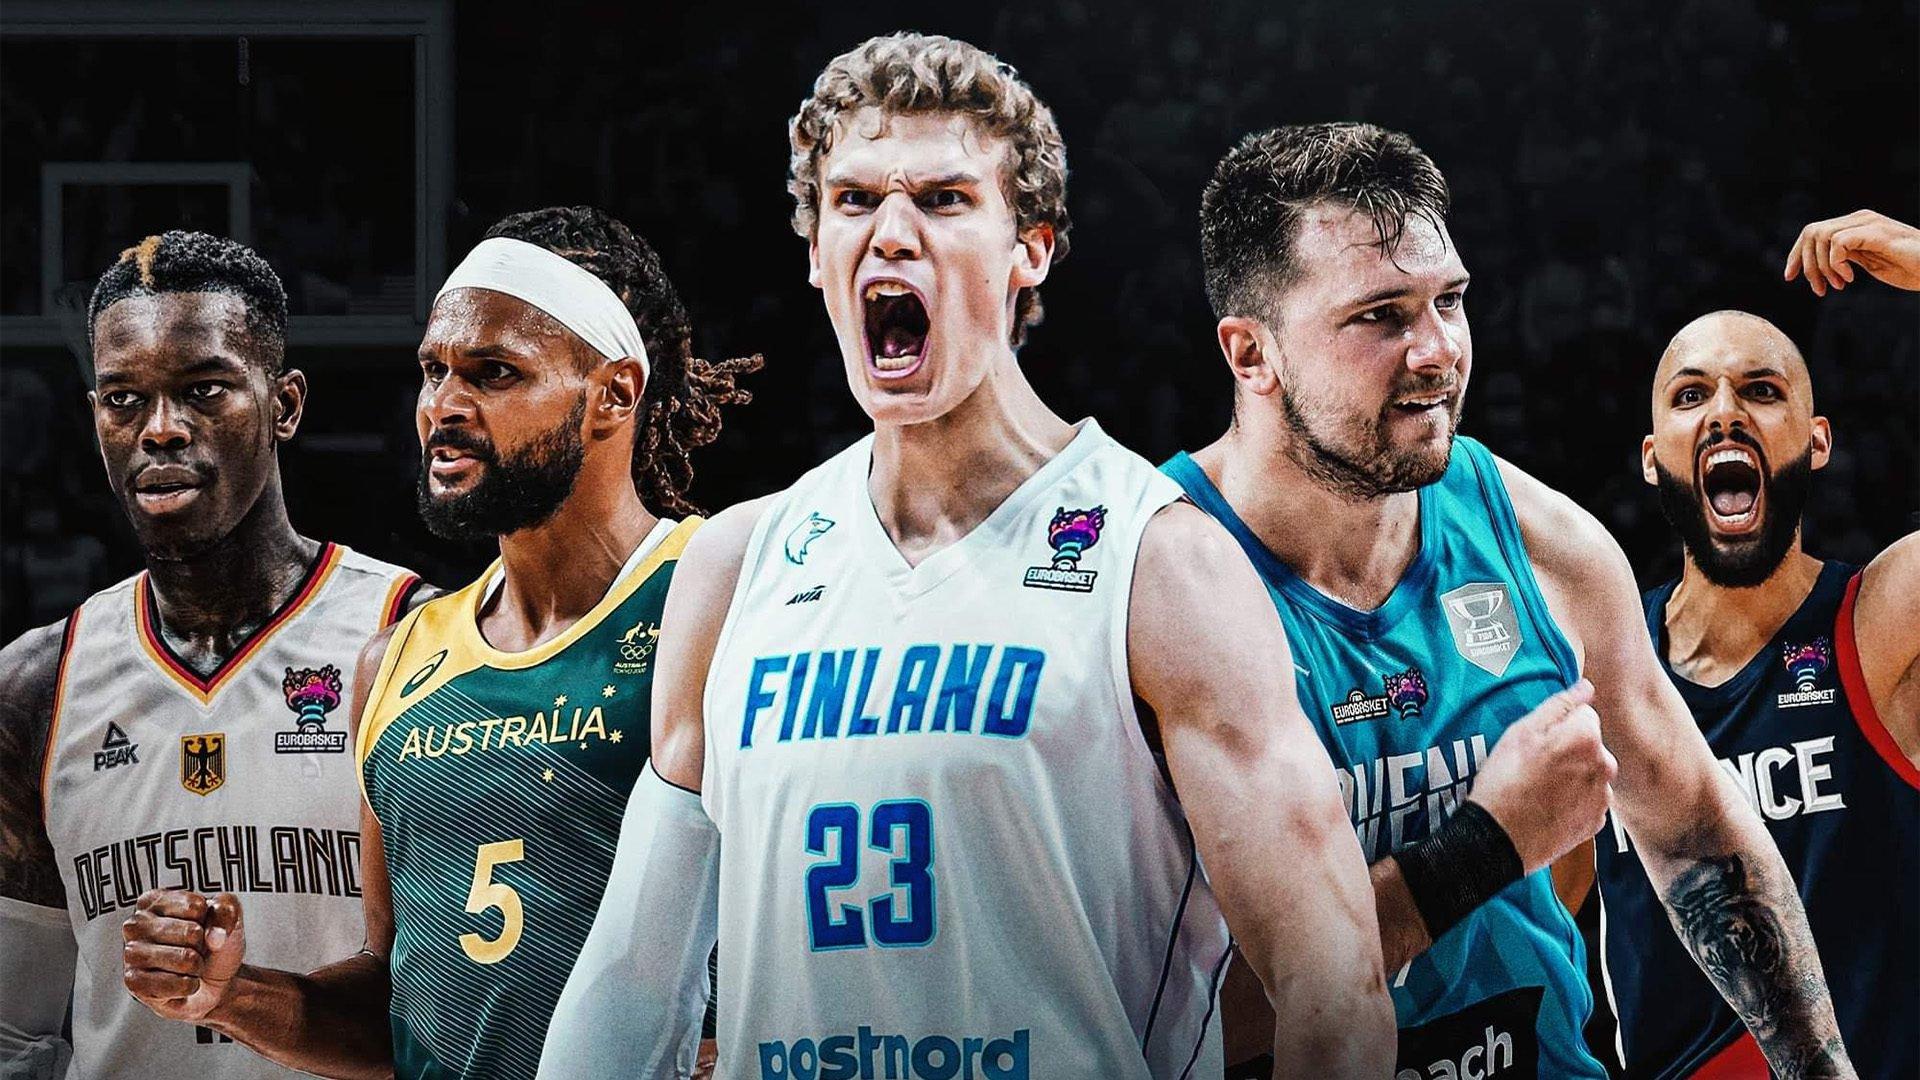 Australia Starting 5 in the 2023 Fiba Basketball World Cup